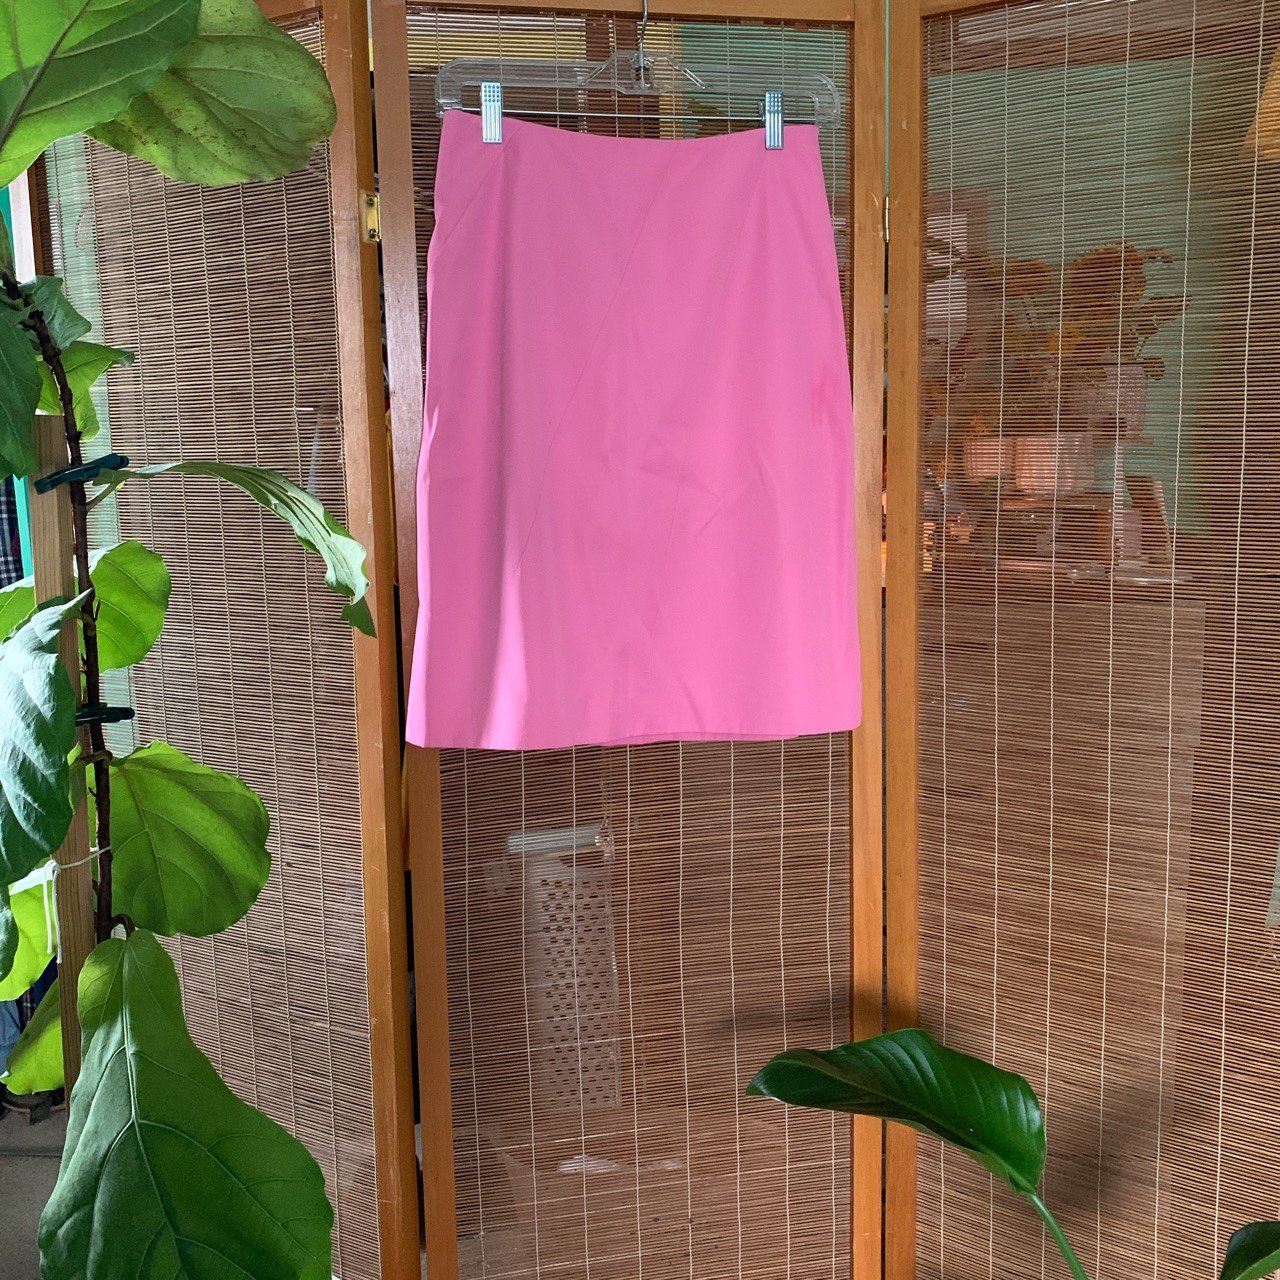 Authentic BCBG Maxazria pink skirt size 2. gtSK5oSaL Zero Profit 